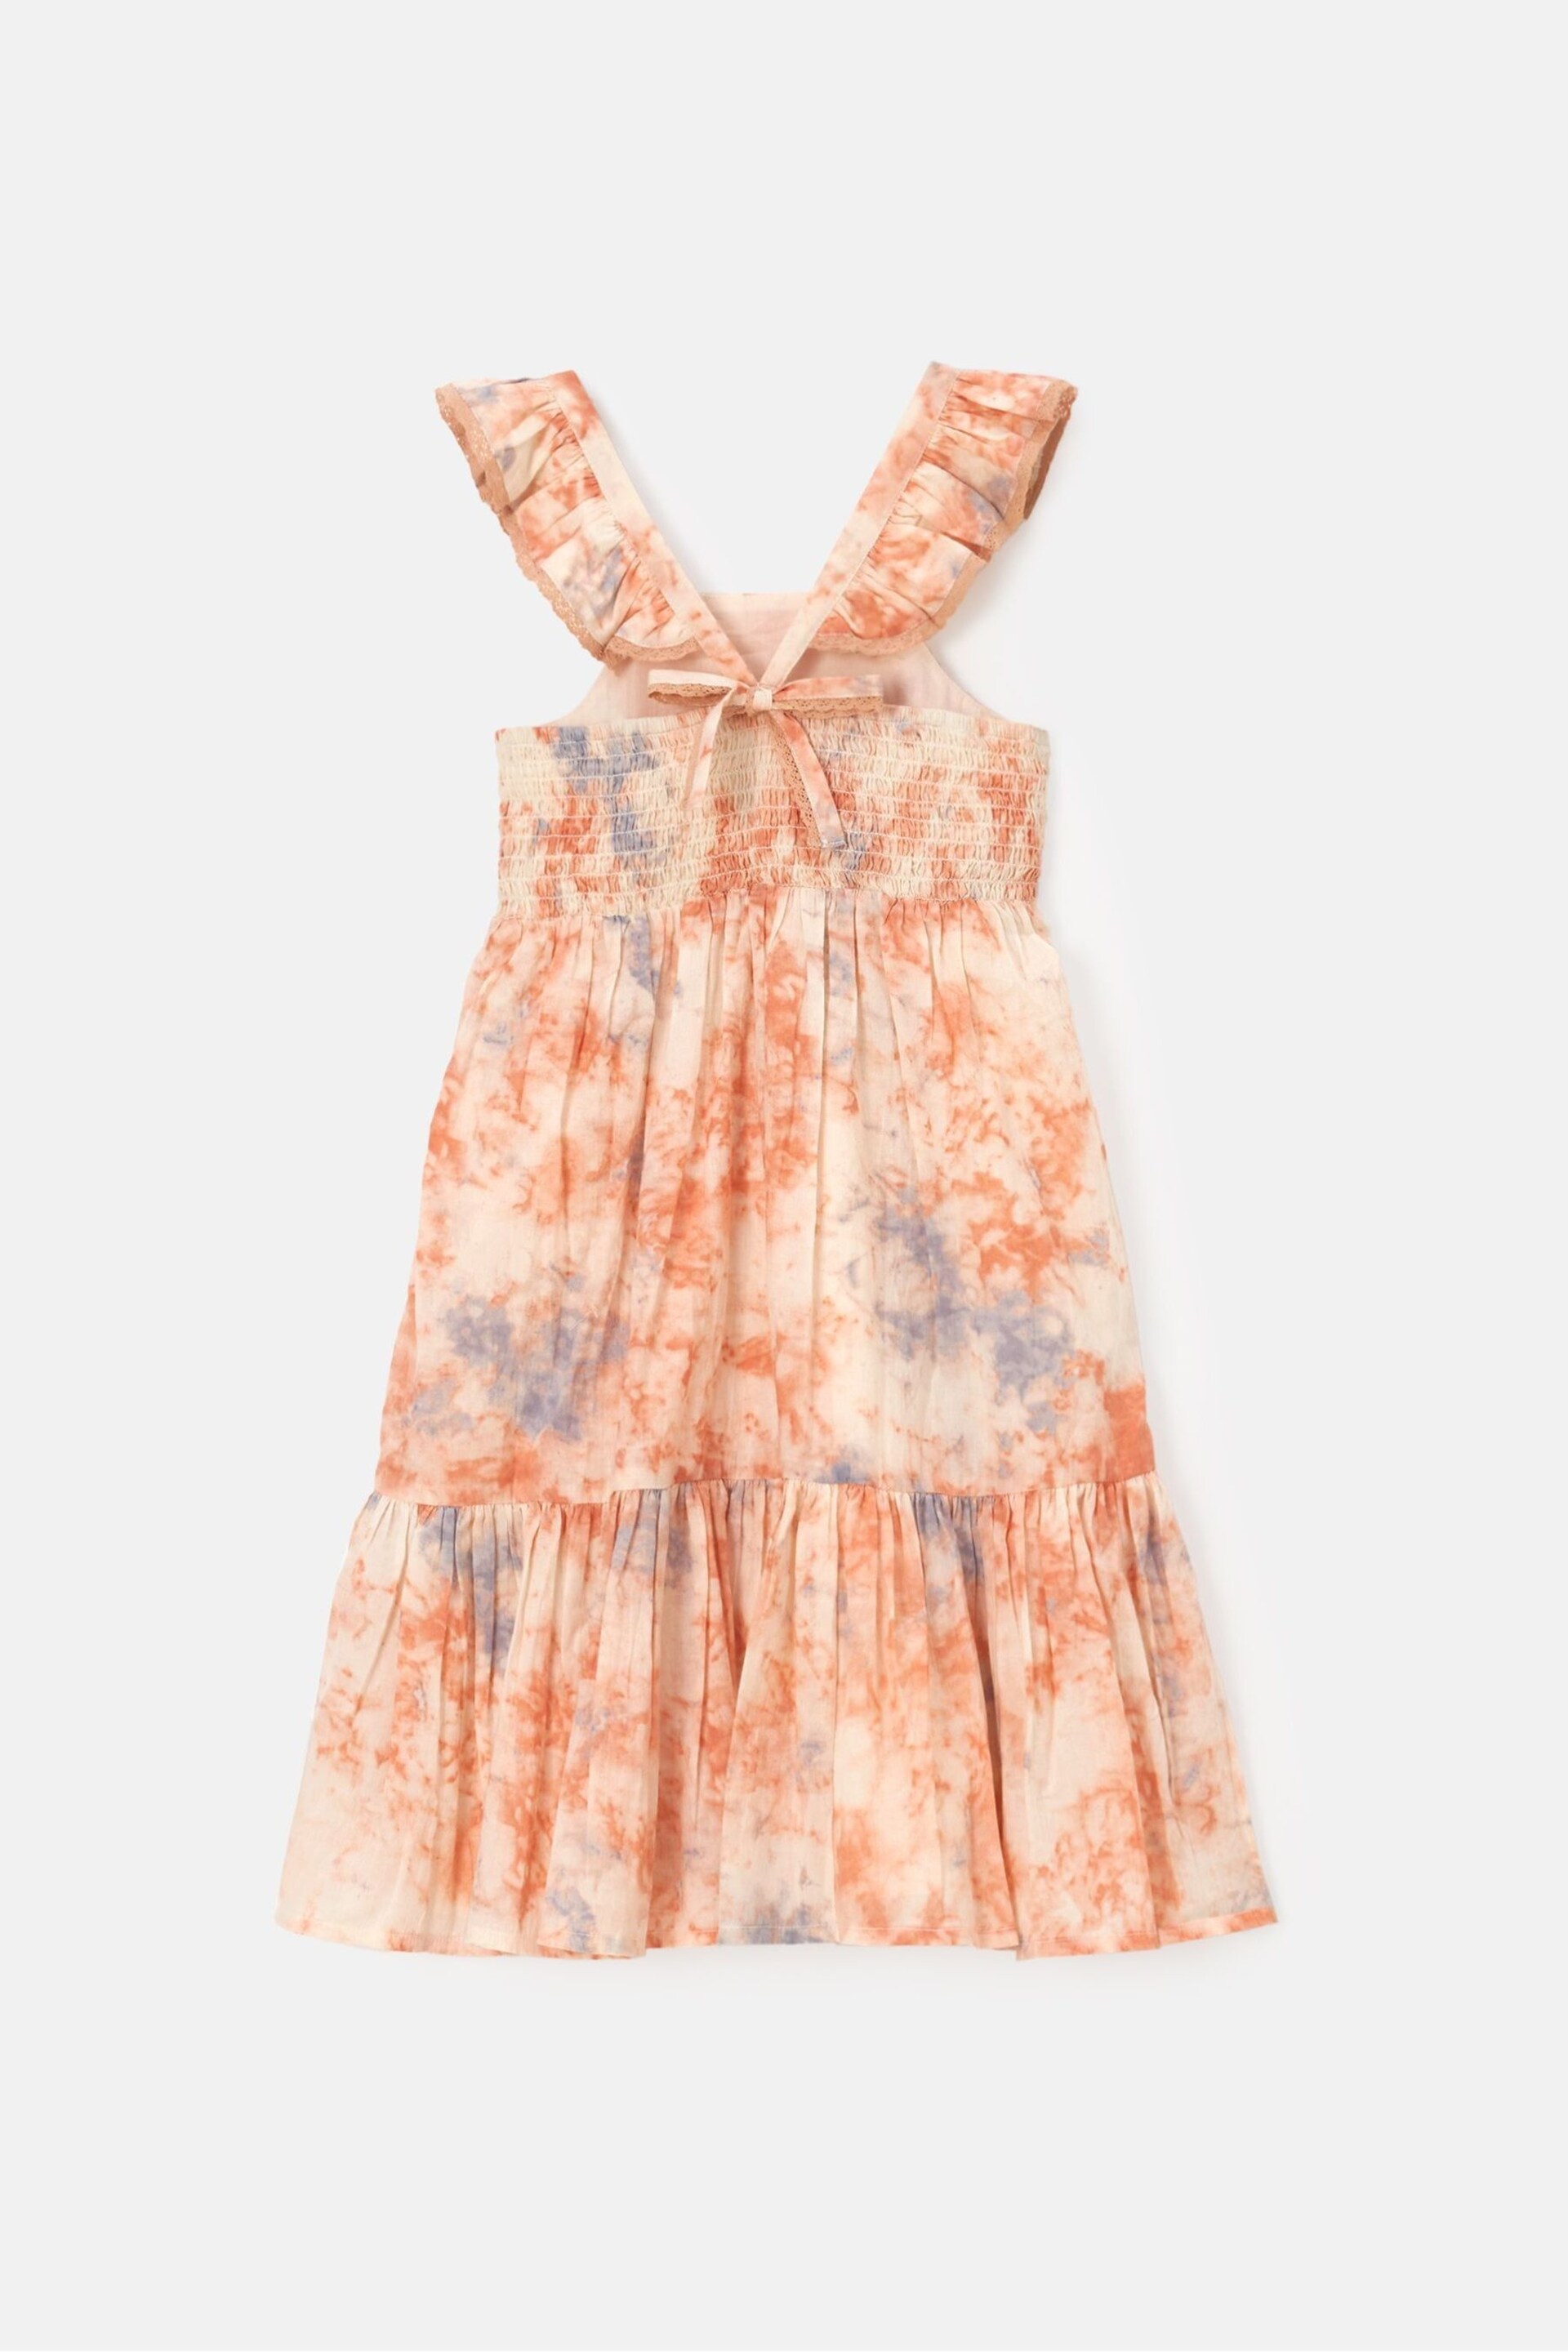 Angel & Rocket Orange April Pastel Tie Dye Dress - Image 4 of 5